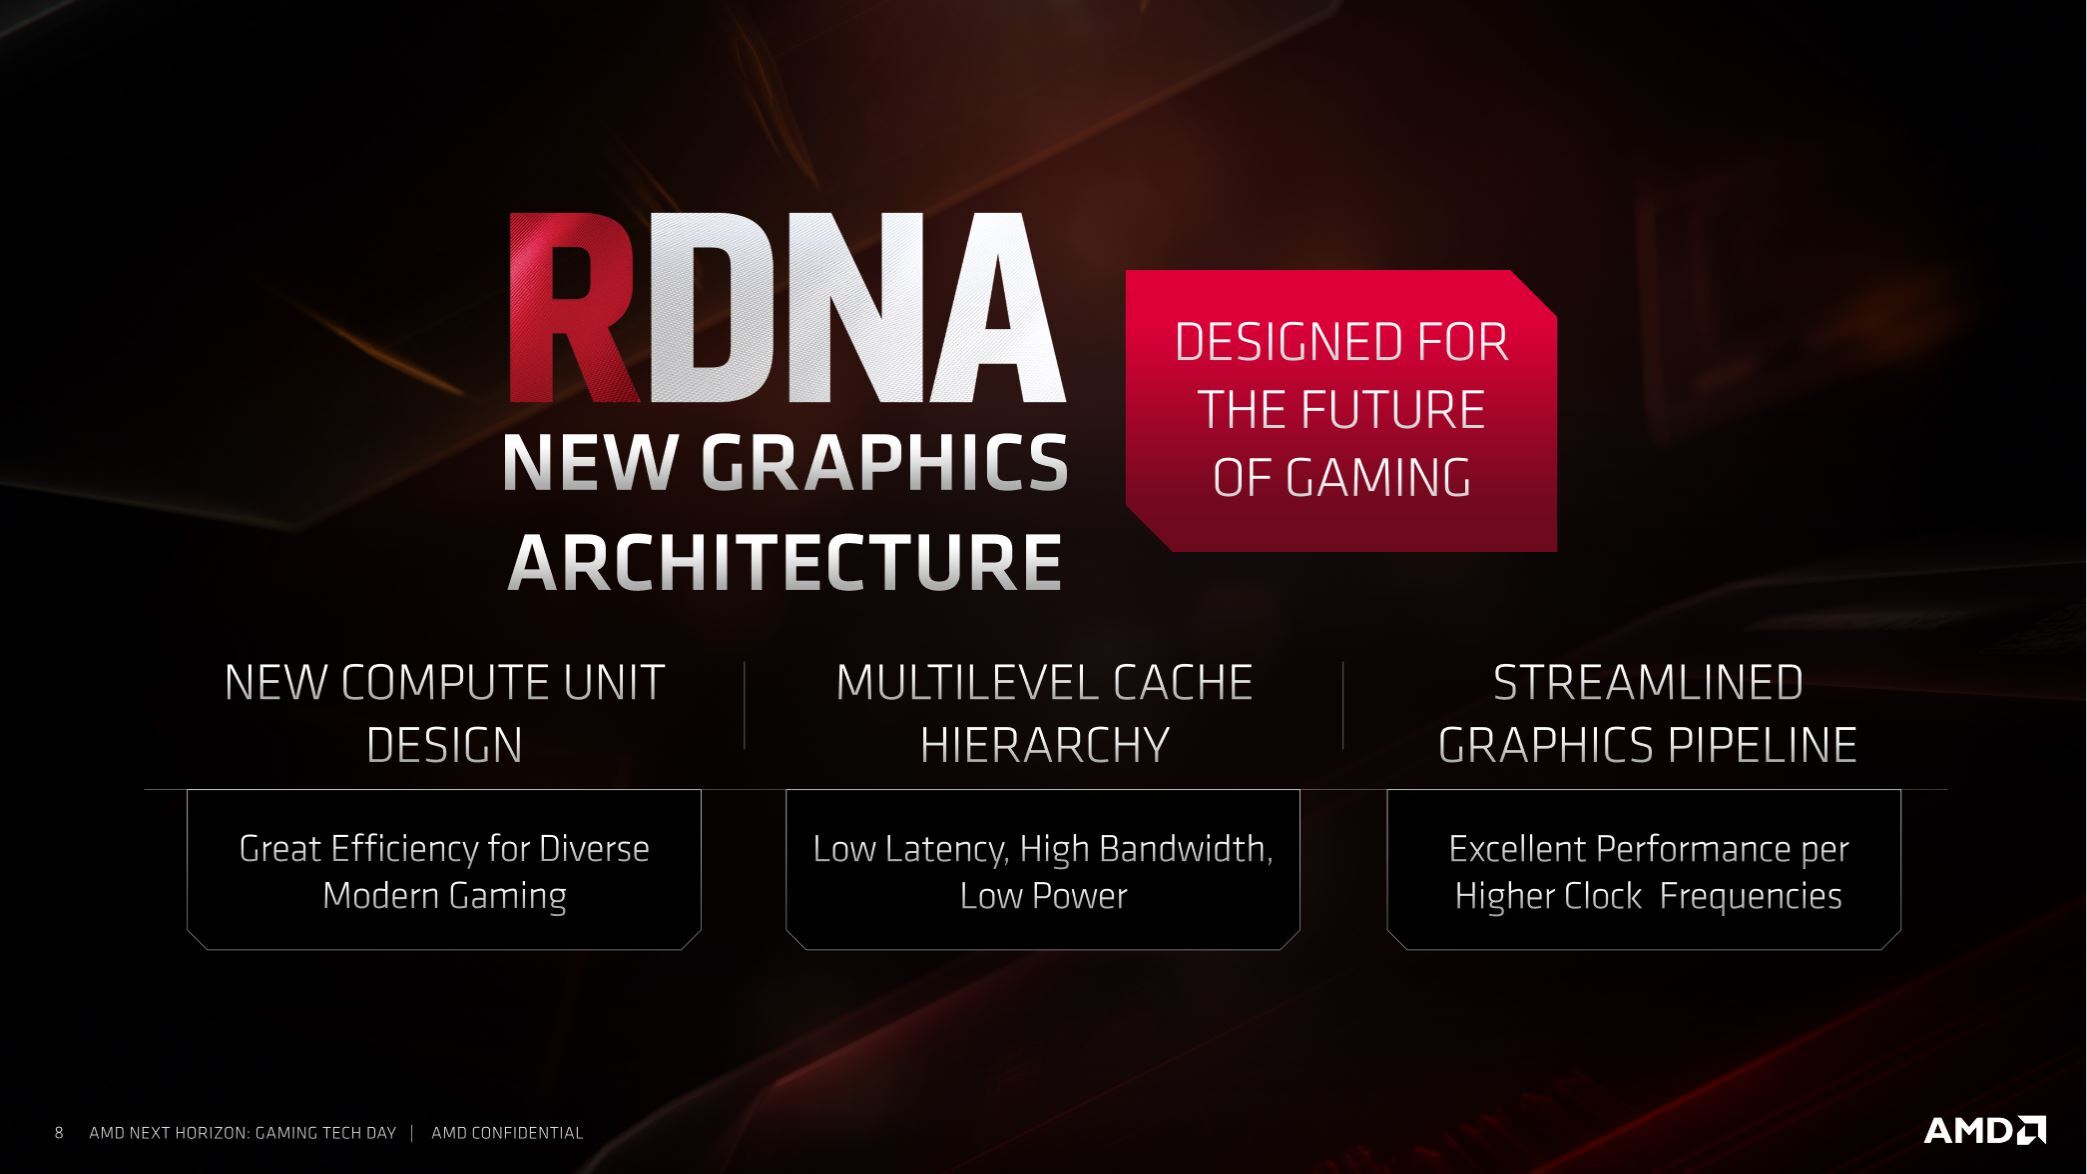 AMD Radeon RX 5700 XT RIS 2